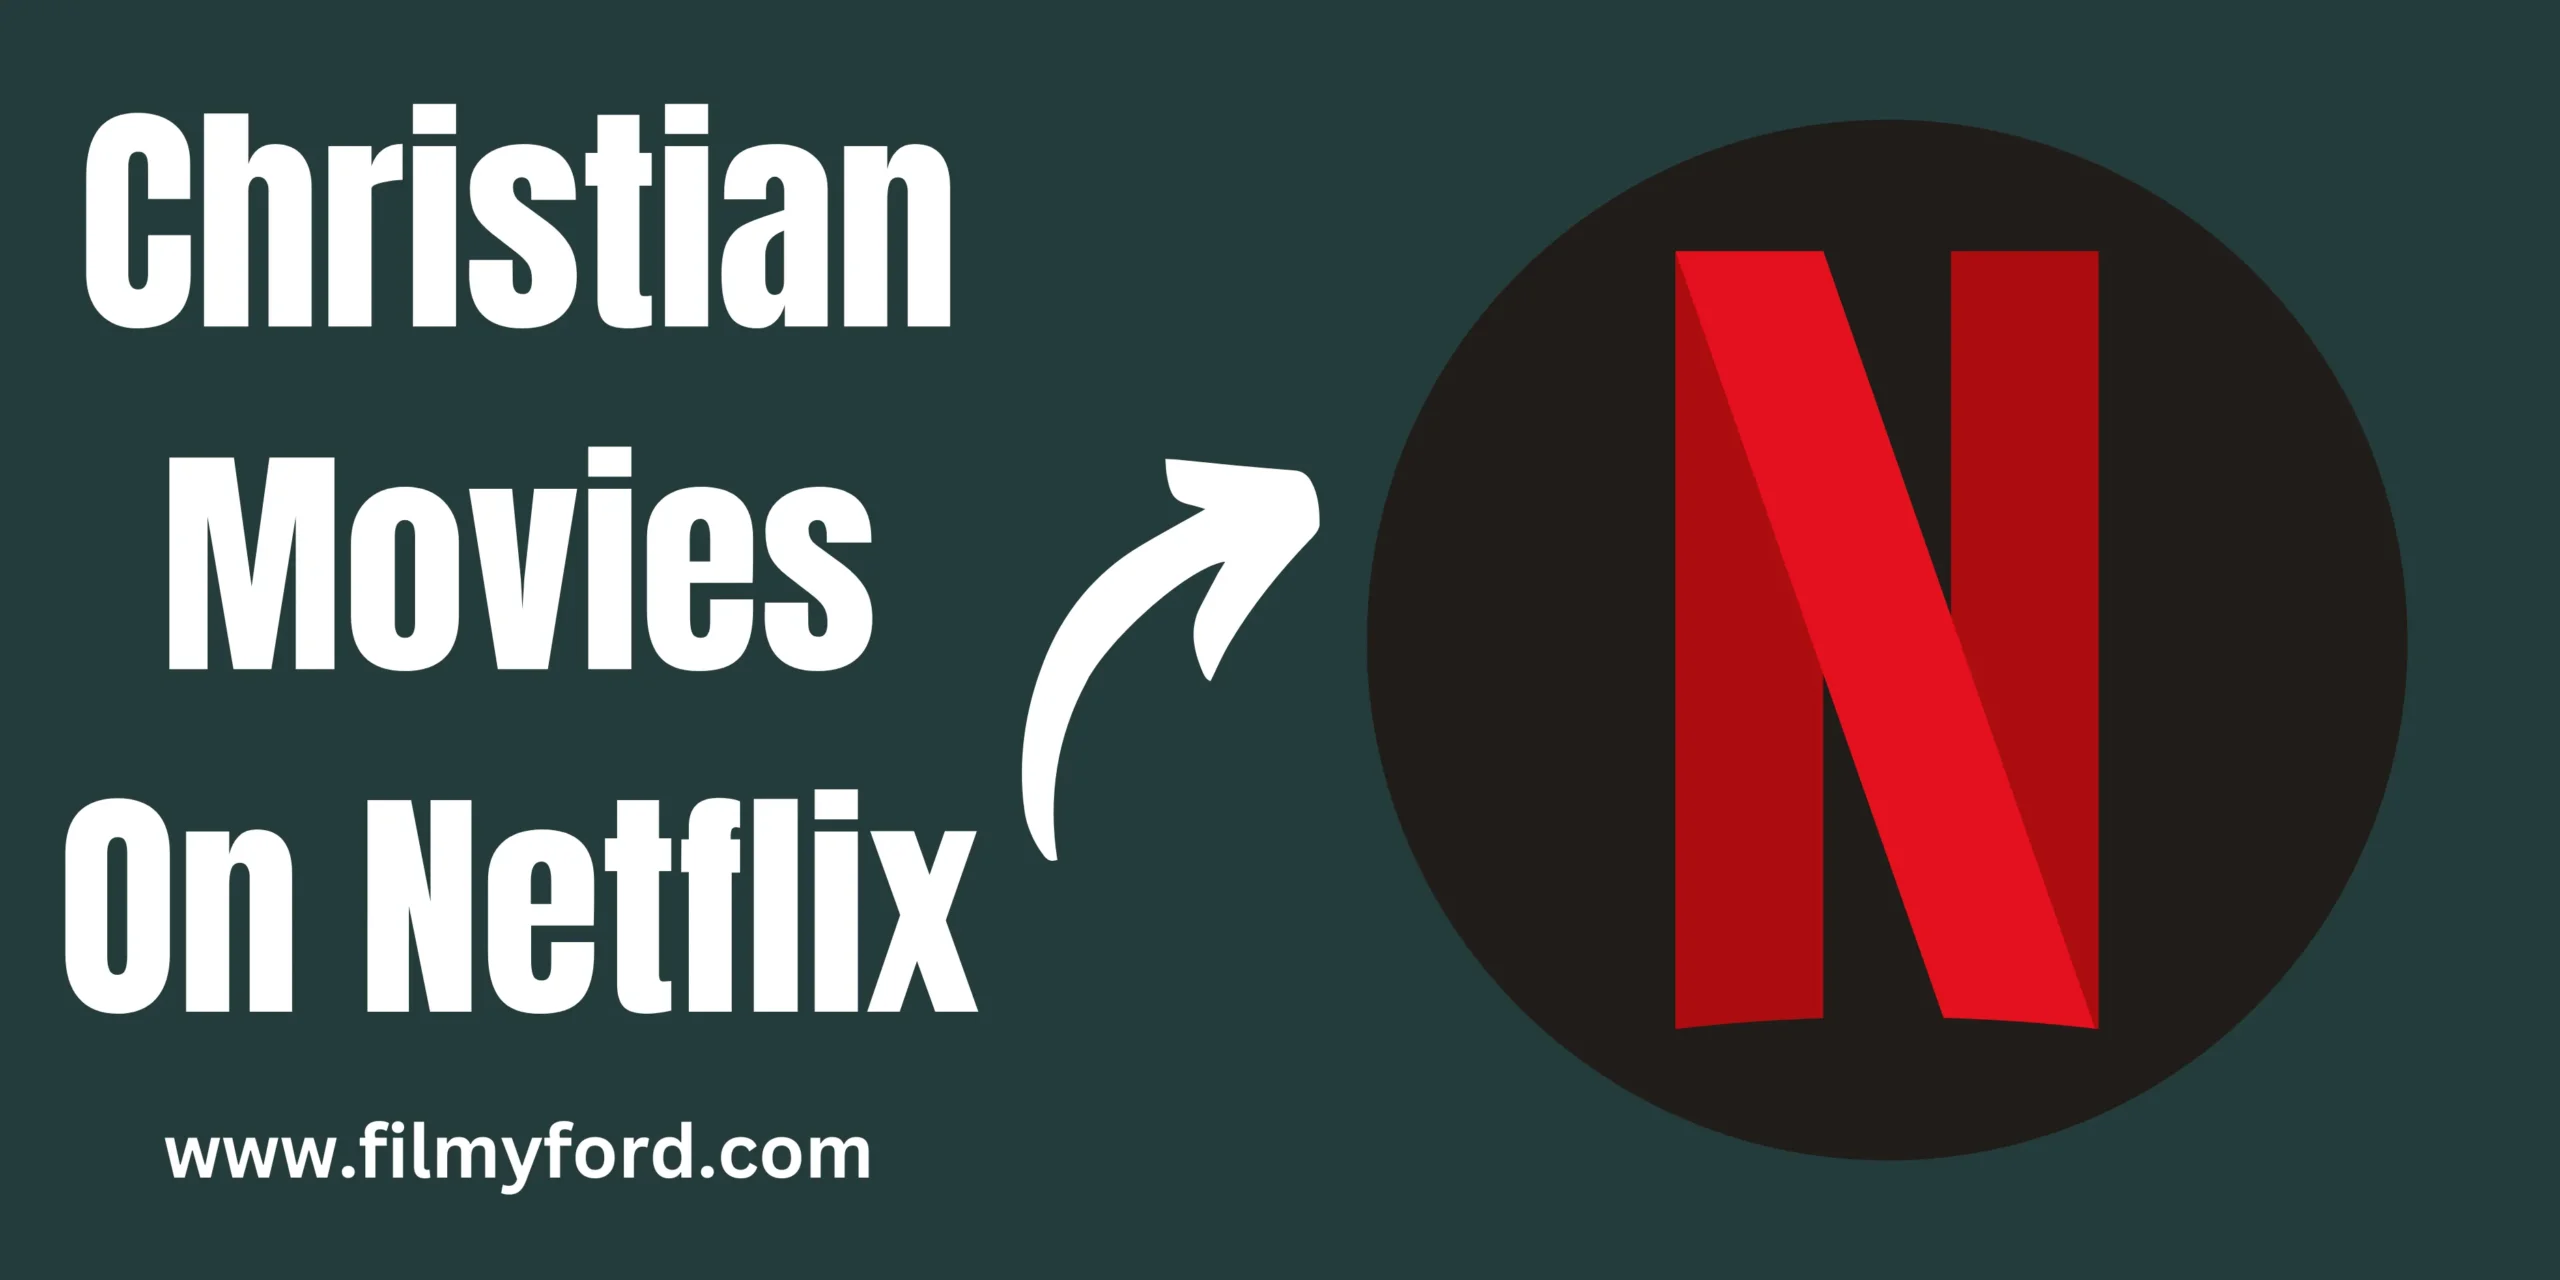 Christian Movies On Netflix